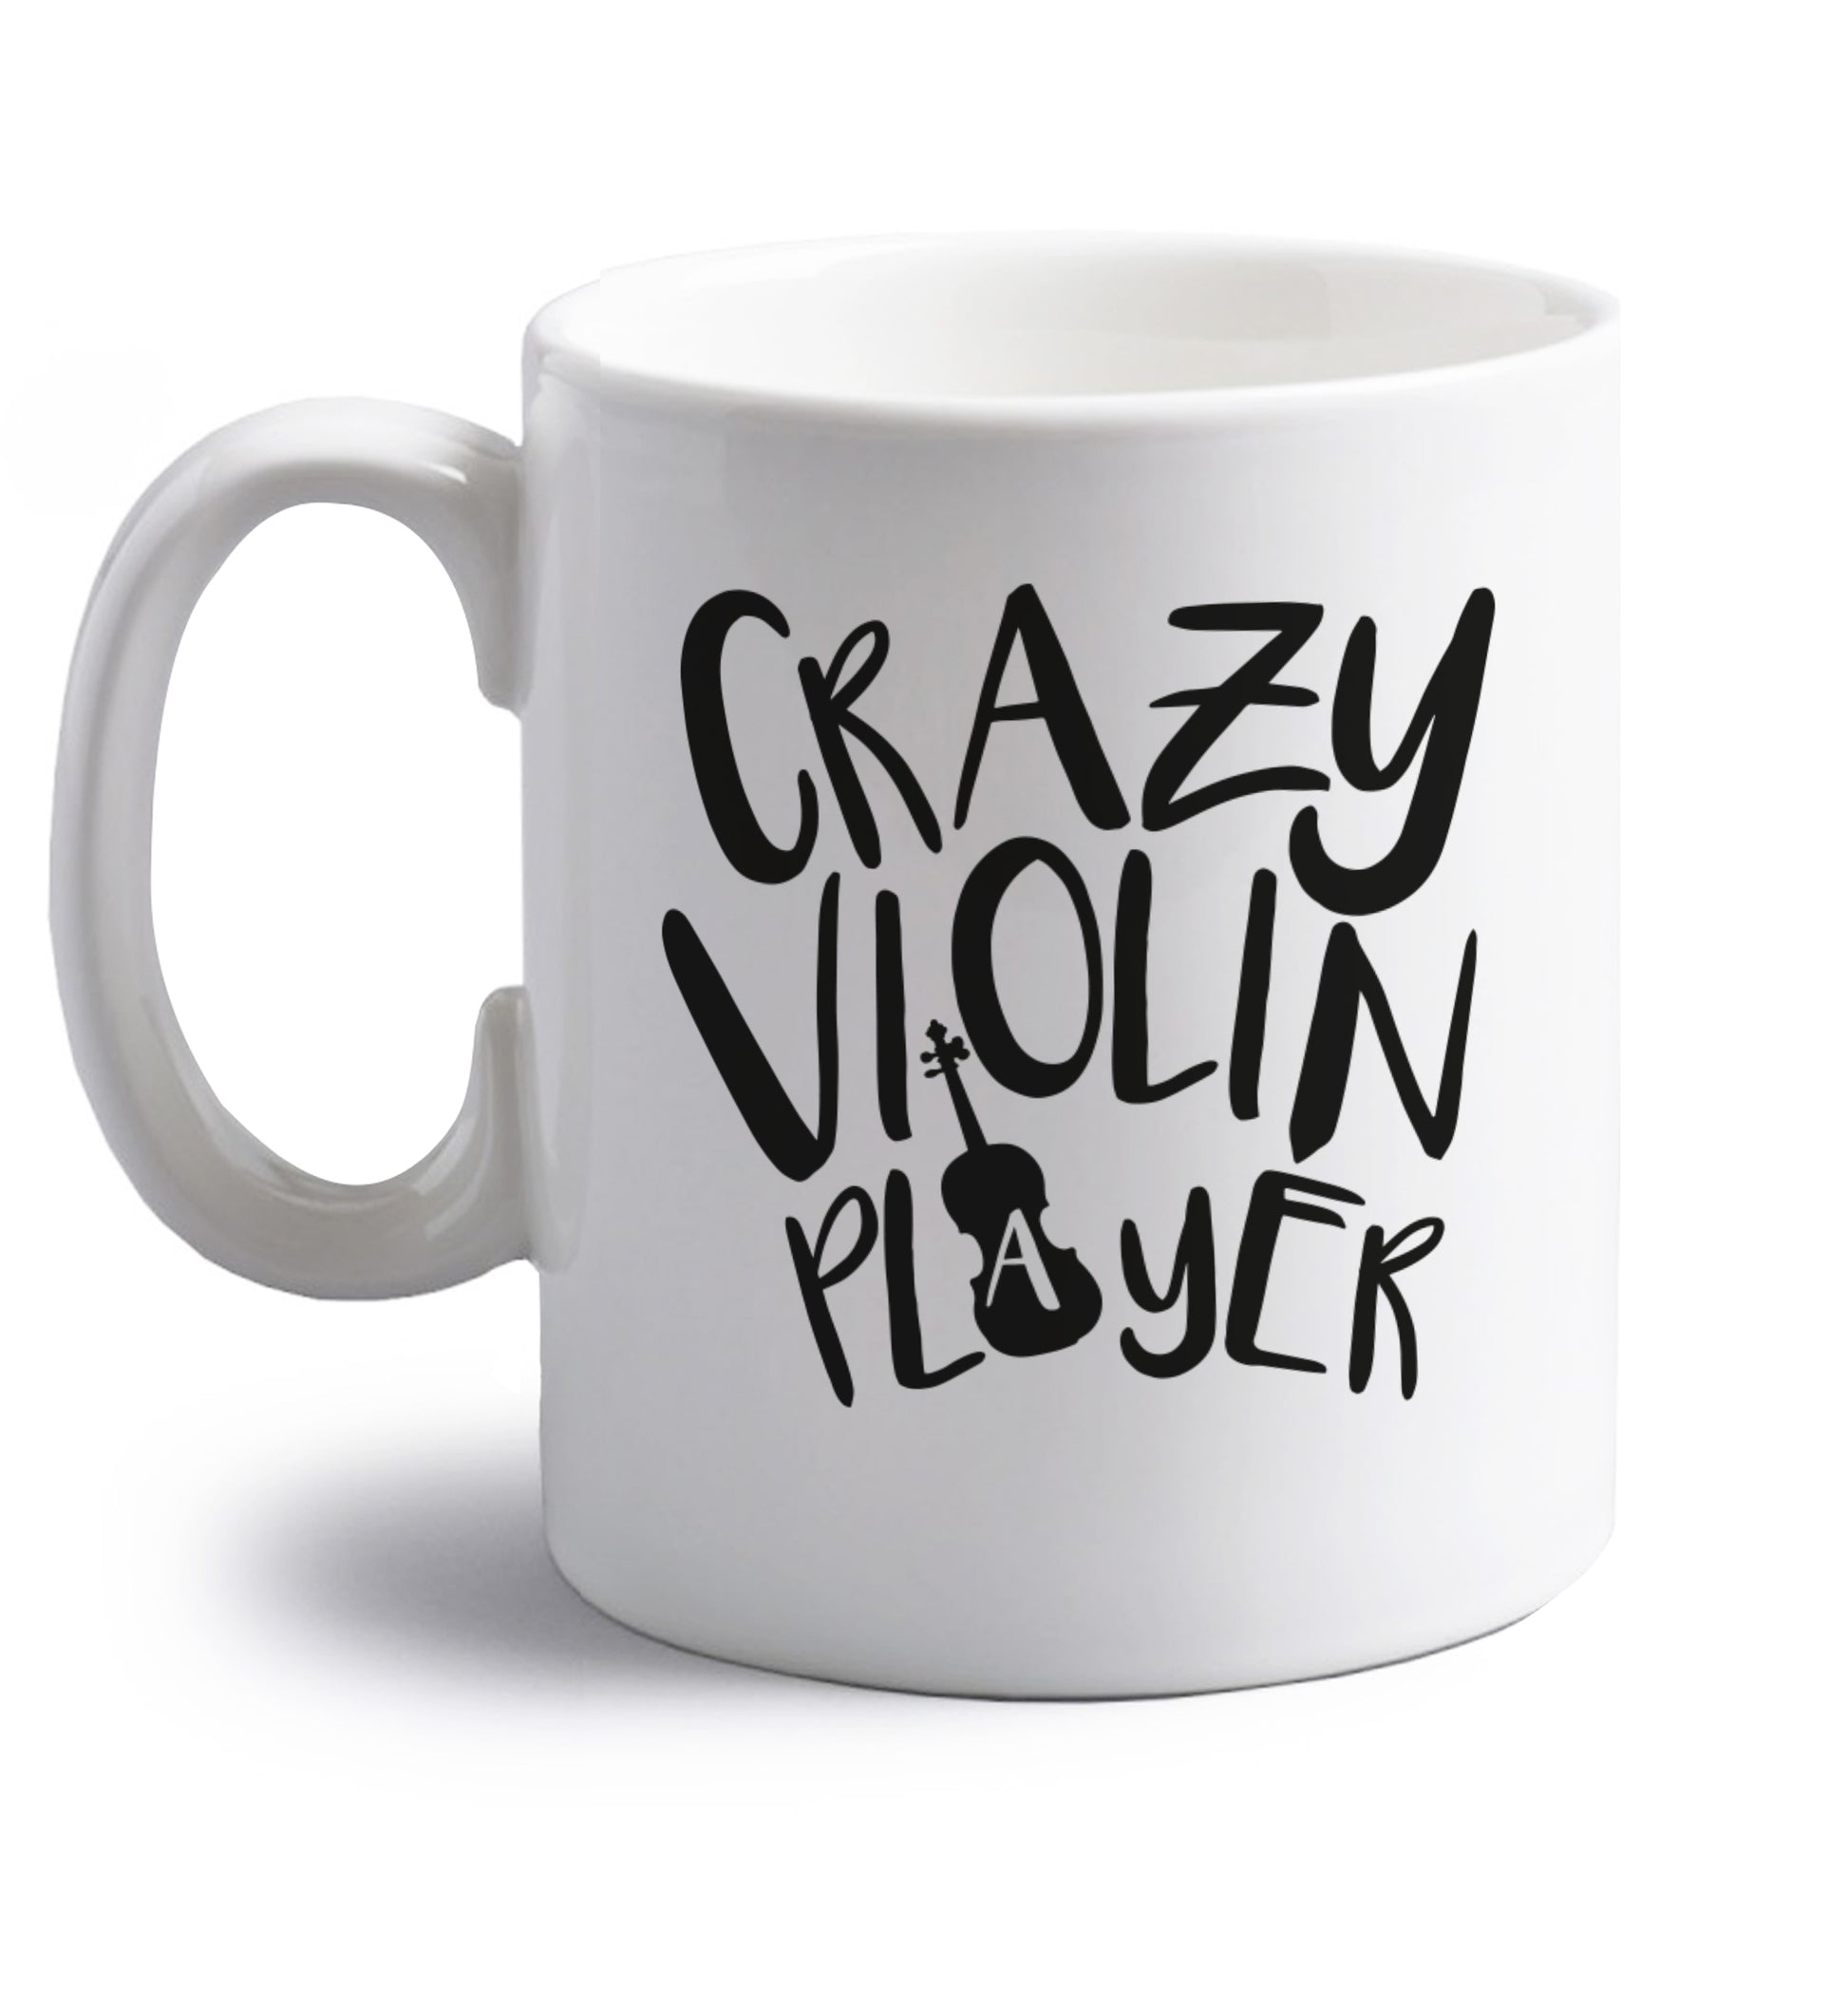 Crazy Violin Player right handed white ceramic mug 